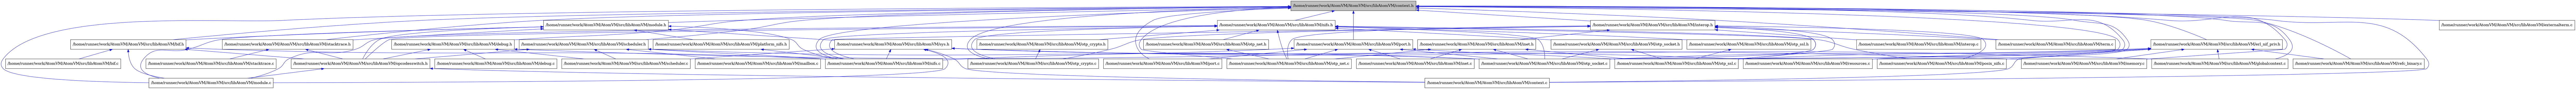 digraph {
    graph [bgcolor="#00000000"]
    node [shape=rectangle style=filled fillcolor="#FFFFFF" font=Helvetica padding=2]
    edge [color="#1414CE"]
    "3" [label="/home/runner/work/AtomVM/AtomVM/src/libAtomVM/bif.c" tooltip="/home/runner/work/AtomVM/AtomVM/src/libAtomVM/bif.c"]
    "2" [label="/home/runner/work/AtomVM/AtomVM/src/libAtomVM/bif.h" tooltip="/home/runner/work/AtomVM/AtomVM/src/libAtomVM/bif.h"]
    "28" [label="/home/runner/work/AtomVM/AtomVM/src/libAtomVM/platform_nifs.h" tooltip="/home/runner/work/AtomVM/AtomVM/src/libAtomVM/platform_nifs.h"]
    "16" [label="/home/runner/work/AtomVM/AtomVM/src/libAtomVM/posix_nifs.c" tooltip="/home/runner/work/AtomVM/AtomVM/src/libAtomVM/posix_nifs.c"]
    "22" [label="/home/runner/work/AtomVM/AtomVM/src/libAtomVM/inet.c" tooltip="/home/runner/work/AtomVM/AtomVM/src/libAtomVM/inet.c"]
    "21" [label="/home/runner/work/AtomVM/AtomVM/src/libAtomVM/inet.h" tooltip="/home/runner/work/AtomVM/AtomVM/src/libAtomVM/inet.h"]
    "11" [label="/home/runner/work/AtomVM/AtomVM/src/libAtomVM/scheduler.c" tooltip="/home/runner/work/AtomVM/AtomVM/src/libAtomVM/scheduler.c"]
    "39" [label="/home/runner/work/AtomVM/AtomVM/src/libAtomVM/scheduler.h" tooltip="/home/runner/work/AtomVM/AtomVM/src/libAtomVM/scheduler.h"]
    "7" [label="/home/runner/work/AtomVM/AtomVM/src/libAtomVM/context.c" tooltip="/home/runner/work/AtomVM/AtomVM/src/libAtomVM/context.c"]
    "1" [label="/home/runner/work/AtomVM/AtomVM/src/libAtomVM/context.h" tooltip="/home/runner/work/AtomVM/AtomVM/src/libAtomVM/context.h" fillcolor="#BFBFBF"]
    "37" [label="/home/runner/work/AtomVM/AtomVM/src/libAtomVM/port.c" tooltip="/home/runner/work/AtomVM/AtomVM/src/libAtomVM/port.c"]
    "38" [label="/home/runner/work/AtomVM/AtomVM/src/libAtomVM/port.h" tooltip="/home/runner/work/AtomVM/AtomVM/src/libAtomVM/port.h"]
    "30" [label="/home/runner/work/AtomVM/AtomVM/src/libAtomVM/stacktrace.c" tooltip="/home/runner/work/AtomVM/AtomVM/src/libAtomVM/stacktrace.c"]
    "29" [label="/home/runner/work/AtomVM/AtomVM/src/libAtomVM/stacktrace.h" tooltip="/home/runner/work/AtomVM/AtomVM/src/libAtomVM/stacktrace.h"]
    "17" [label="/home/runner/work/AtomVM/AtomVM/src/libAtomVM/refc_binary.c" tooltip="/home/runner/work/AtomVM/AtomVM/src/libAtomVM/refc_binary.c"]
    "40" [label="/home/runner/work/AtomVM/AtomVM/src/libAtomVM/mailbox.c" tooltip="/home/runner/work/AtomVM/AtomVM/src/libAtomVM/mailbox.c"]
    "4" [label="/home/runner/work/AtomVM/AtomVM/src/libAtomVM/module.c" tooltip="/home/runner/work/AtomVM/AtomVM/src/libAtomVM/module.c"]
    "27" [label="/home/runner/work/AtomVM/AtomVM/src/libAtomVM/module.h" tooltip="/home/runner/work/AtomVM/AtomVM/src/libAtomVM/module.h"]
    "26" [label="/home/runner/work/AtomVM/AtomVM/src/libAtomVM/term.c" tooltip="/home/runner/work/AtomVM/AtomVM/src/libAtomVM/term.c"]
    "24" [label="/home/runner/work/AtomVM/AtomVM/src/libAtomVM/interop.c" tooltip="/home/runner/work/AtomVM/AtomVM/src/libAtomVM/interop.c"]
    "15" [label="/home/runner/work/AtomVM/AtomVM/src/libAtomVM/otp_ssl.c" tooltip="/home/runner/work/AtomVM/AtomVM/src/libAtomVM/otp_ssl.c"]
    "20" [label="/home/runner/work/AtomVM/AtomVM/src/libAtomVM/interop.h" tooltip="/home/runner/work/AtomVM/AtomVM/src/libAtomVM/interop.h"]
    "36" [label="/home/runner/work/AtomVM/AtomVM/src/libAtomVM/otp_ssl.h" tooltip="/home/runner/work/AtomVM/AtomVM/src/libAtomVM/otp_ssl.h"]
    "18" [label="/home/runner/work/AtomVM/AtomVM/src/libAtomVM/resources.c" tooltip="/home/runner/work/AtomVM/AtomVM/src/libAtomVM/resources.c"]
    "25" [label="/home/runner/work/AtomVM/AtomVM/src/libAtomVM/otp_crypto.c" tooltip="/home/runner/work/AtomVM/AtomVM/src/libAtomVM/otp_crypto.c"]
    "33" [label="/home/runner/work/AtomVM/AtomVM/src/libAtomVM/otp_crypto.h" tooltip="/home/runner/work/AtomVM/AtomVM/src/libAtomVM/otp_crypto.h"]
    "23" [label="/home/runner/work/AtomVM/AtomVM/src/libAtomVM/otp_net.c" tooltip="/home/runner/work/AtomVM/AtomVM/src/libAtomVM/otp_net.c"]
    "34" [label="/home/runner/work/AtomVM/AtomVM/src/libAtomVM/otp_net.h" tooltip="/home/runner/work/AtomVM/AtomVM/src/libAtomVM/otp_net.h"]
    "12" [label="/home/runner/work/AtomVM/AtomVM/src/libAtomVM/erl_nif_priv.h" tooltip="/home/runner/work/AtomVM/AtomVM/src/libAtomVM/erl_nif_priv.h"]
    "31" [label="/home/runner/work/AtomVM/AtomVM/src/libAtomVM/sys.h" tooltip="/home/runner/work/AtomVM/AtomVM/src/libAtomVM/sys.h"]
    "5" [label="/home/runner/work/AtomVM/AtomVM/src/libAtomVM/nifs.c" tooltip="/home/runner/work/AtomVM/AtomVM/src/libAtomVM/nifs.c"]
    "32" [label="/home/runner/work/AtomVM/AtomVM/src/libAtomVM/nifs.h" tooltip="/home/runner/work/AtomVM/AtomVM/src/libAtomVM/nifs.h"]
    "6" [label="/home/runner/work/AtomVM/AtomVM/src/libAtomVM/opcodesswitch.h" tooltip="/home/runner/work/AtomVM/AtomVM/src/libAtomVM/opcodesswitch.h"]
    "9" [label="/home/runner/work/AtomVM/AtomVM/src/libAtomVM/debug.c" tooltip="/home/runner/work/AtomVM/AtomVM/src/libAtomVM/debug.c"]
    "8" [label="/home/runner/work/AtomVM/AtomVM/src/libAtomVM/debug.h" tooltip="/home/runner/work/AtomVM/AtomVM/src/libAtomVM/debug.h"]
    "13" [label="/home/runner/work/AtomVM/AtomVM/src/libAtomVM/globalcontext.c" tooltip="/home/runner/work/AtomVM/AtomVM/src/libAtomVM/globalcontext.c"]
    "10" [label="/home/runner/work/AtomVM/AtomVM/src/libAtomVM/memory.c" tooltip="/home/runner/work/AtomVM/AtomVM/src/libAtomVM/memory.c"]
    "14" [label="/home/runner/work/AtomVM/AtomVM/src/libAtomVM/otp_socket.c" tooltip="/home/runner/work/AtomVM/AtomVM/src/libAtomVM/otp_socket.c"]
    "35" [label="/home/runner/work/AtomVM/AtomVM/src/libAtomVM/otp_socket.h" tooltip="/home/runner/work/AtomVM/AtomVM/src/libAtomVM/otp_socket.h"]
    "19" [label="/home/runner/work/AtomVM/AtomVM/src/libAtomVM/externalterm.c" tooltip="/home/runner/work/AtomVM/AtomVM/src/libAtomVM/externalterm.c"]
    "2" -> "3" [dir=back tooltip="include"]
    "2" -> "4" [dir=back tooltip="include"]
    "2" -> "5" [dir=back tooltip="include"]
    "2" -> "6" [dir=back tooltip="include"]
    "28" -> "5" [dir=back tooltip="include"]
    "21" -> "22" [dir=back tooltip="include"]
    "21" -> "23" [dir=back tooltip="include"]
    "21" -> "14" [dir=back tooltip="include"]
    "21" -> "15" [dir=back tooltip="include"]
    "39" -> "40" [dir=back tooltip="include"]
    "39" -> "5" [dir=back tooltip="include"]
    "39" -> "6" [dir=back tooltip="include"]
    "39" -> "14" [dir=back tooltip="include"]
    "39" -> "11" [dir=back tooltip="include"]
    "1" -> "2" [dir=back tooltip="include"]
    "1" -> "7" [dir=back tooltip="include"]
    "1" -> "8" [dir=back tooltip="include"]
    "1" -> "12" [dir=back tooltip="include"]
    "1" -> "19" [dir=back tooltip="include"]
    "1" -> "13" [dir=back tooltip="include"]
    "1" -> "20" [dir=back tooltip="include"]
    "1" -> "10" [dir=back tooltip="include"]
    "1" -> "4" [dir=back tooltip="include"]
    "1" -> "27" [dir=back tooltip="include"]
    "1" -> "5" [dir=back tooltip="include"]
    "1" -> "32" [dir=back tooltip="include"]
    "1" -> "25" [dir=back tooltip="include"]
    "1" -> "23" [dir=back tooltip="include"]
    "1" -> "14" [dir=back tooltip="include"]
    "1" -> "15" [dir=back tooltip="include"]
    "1" -> "37" [dir=back tooltip="include"]
    "1" -> "38" [dir=back tooltip="include"]
    "1" -> "17" [dir=back tooltip="include"]
    "1" -> "18" [dir=back tooltip="include"]
    "1" -> "39" [dir=back tooltip="include"]
    "1" -> "29" [dir=back tooltip="include"]
    "1" -> "26" [dir=back tooltip="include"]
    "38" -> "22" [dir=back tooltip="include"]
    "38" -> "5" [dir=back tooltip="include"]
    "38" -> "23" [dir=back tooltip="include"]
    "38" -> "14" [dir=back tooltip="include"]
    "38" -> "15" [dir=back tooltip="include"]
    "38" -> "37" [dir=back tooltip="include"]
    "29" -> "6" [dir=back tooltip="include"]
    "29" -> "30" [dir=back tooltip="include"]
    "27" -> "2" [dir=back tooltip="include"]
    "27" -> "4" [dir=back tooltip="include"]
    "27" -> "5" [dir=back tooltip="include"]
    "27" -> "6" [dir=back tooltip="include"]
    "27" -> "28" [dir=back tooltip="include"]
    "27" -> "29" [dir=back tooltip="include"]
    "27" -> "31" [dir=back tooltip="include"]
    "20" -> "21" [dir=back tooltip="include"]
    "20" -> "24" [dir=back tooltip="include"]
    "20" -> "5" [dir=back tooltip="include"]
    "20" -> "25" [dir=back tooltip="include"]
    "20" -> "23" [dir=back tooltip="include"]
    "20" -> "14" [dir=back tooltip="include"]
    "20" -> "15" [dir=back tooltip="include"]
    "20" -> "16" [dir=back tooltip="include"]
    "20" -> "26" [dir=back tooltip="include"]
    "36" -> "15" [dir=back tooltip="include"]
    "33" -> "25" [dir=back tooltip="include"]
    "34" -> "23" [dir=back tooltip="include"]
    "12" -> "7" [dir=back tooltip="include"]
    "12" -> "13" [dir=back tooltip="include"]
    "12" -> "10" [dir=back tooltip="include"]
    "12" -> "14" [dir=back tooltip="include"]
    "12" -> "15" [dir=back tooltip="include"]
    "12" -> "16" [dir=back tooltip="include"]
    "12" -> "17" [dir=back tooltip="include"]
    "12" -> "18" [dir=back tooltip="include"]
    "31" -> "7" [dir=back tooltip="include"]
    "31" -> "13" [dir=back tooltip="include"]
    "31" -> "4" [dir=back tooltip="include"]
    "31" -> "5" [dir=back tooltip="include"]
    "31" -> "14" [dir=back tooltip="include"]
    "31" -> "18" [dir=back tooltip="include"]
    "31" -> "11" [dir=back tooltip="include"]
    "32" -> "4" [dir=back tooltip="include"]
    "32" -> "5" [dir=back tooltip="include"]
    "32" -> "6" [dir=back tooltip="include"]
    "32" -> "25" [dir=back tooltip="include"]
    "32" -> "33" [dir=back tooltip="include"]
    "32" -> "23" [dir=back tooltip="include"]
    "32" -> "34" [dir=back tooltip="include"]
    "32" -> "14" [dir=back tooltip="include"]
    "32" -> "35" [dir=back tooltip="include"]
    "32" -> "15" [dir=back tooltip="include"]
    "32" -> "36" [dir=back tooltip="include"]
    "32" -> "16" [dir=back tooltip="include"]
    "6" -> "7" [dir=back tooltip="include"]
    "6" -> "4" [dir=back tooltip="include"]
    "8" -> "9" [dir=back tooltip="include"]
    "8" -> "10" [dir=back tooltip="include"]
    "8" -> "6" [dir=back tooltip="include"]
    "8" -> "11" [dir=back tooltip="include"]
    "35" -> "14" [dir=back tooltip="include"]
    "35" -> "15" [dir=back tooltip="include"]
}